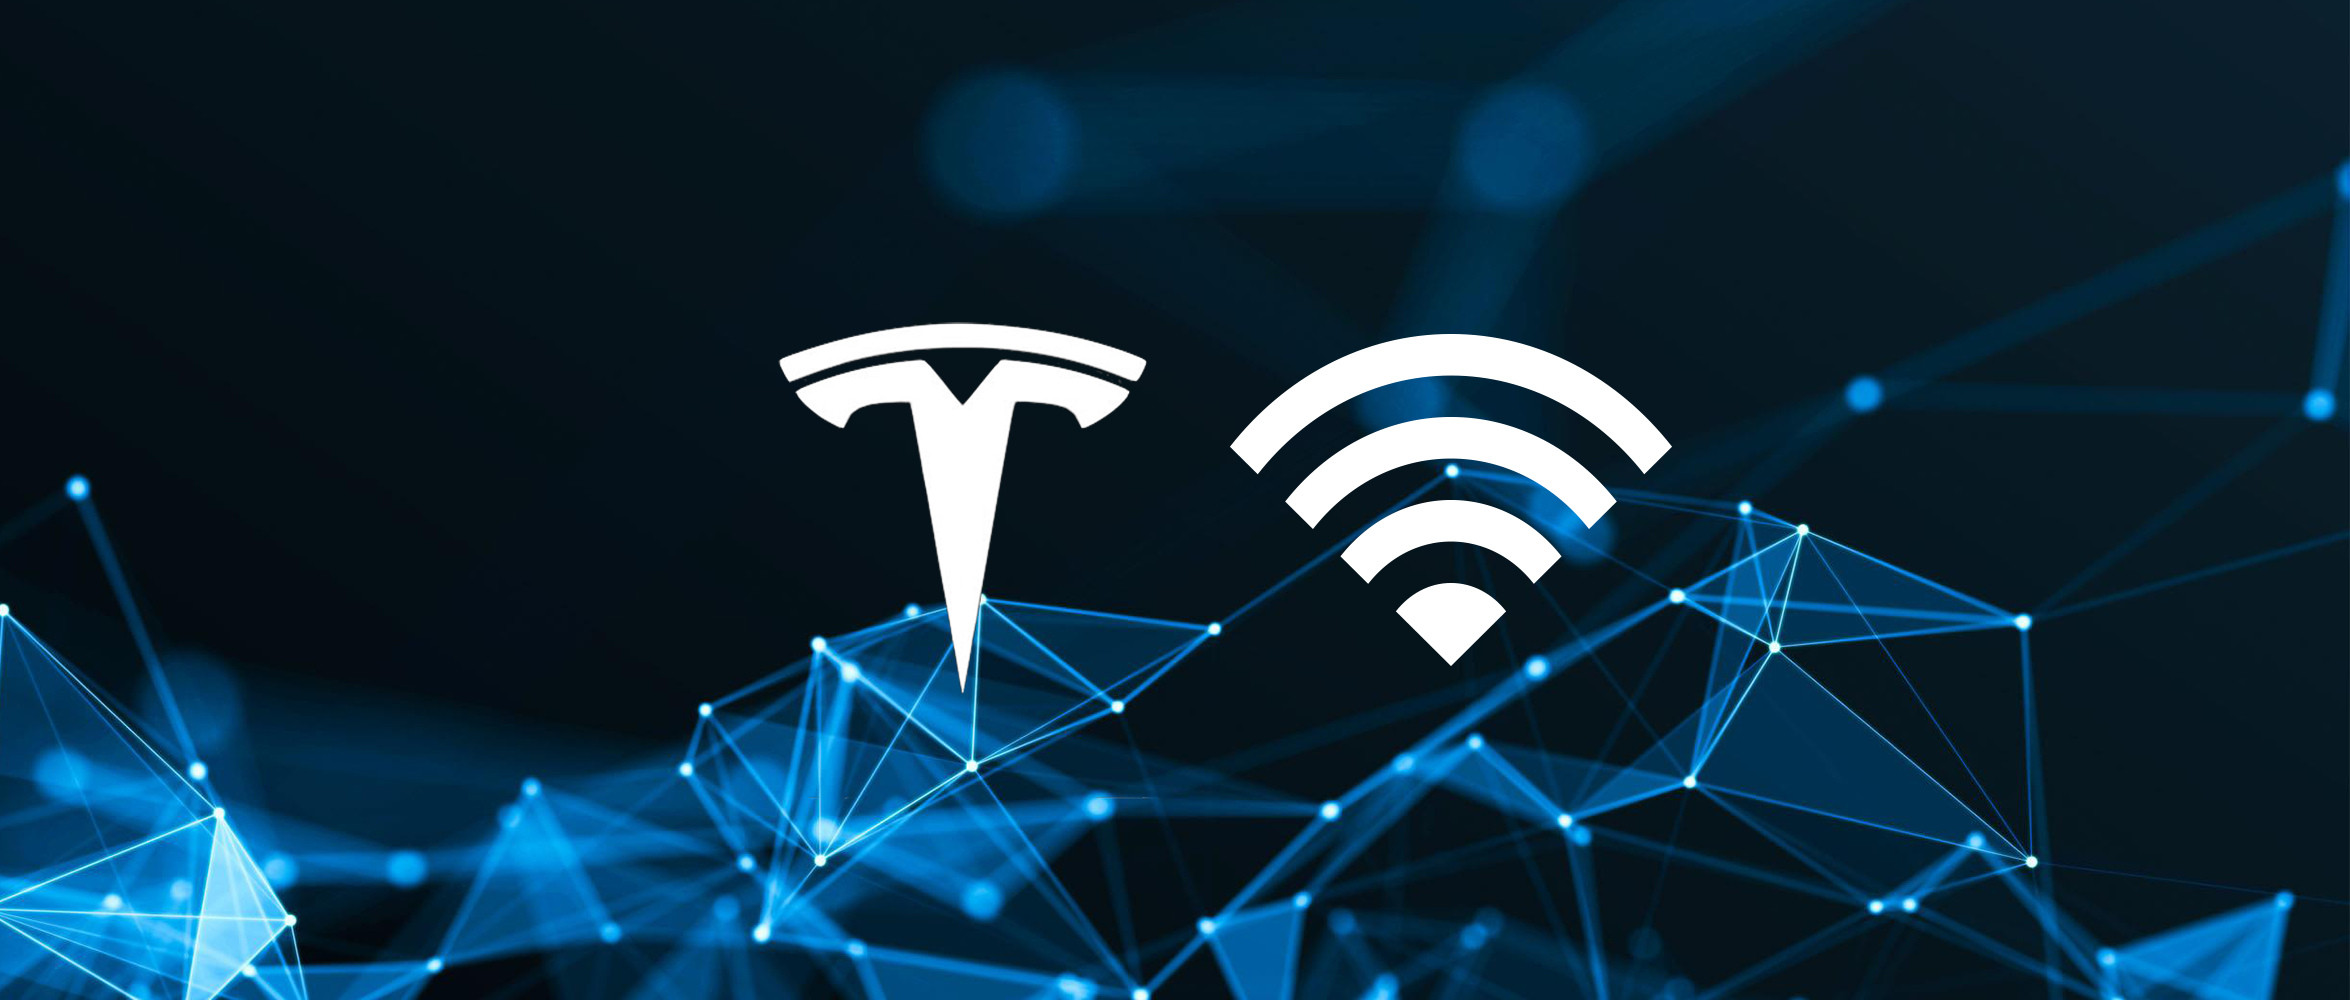 Kalksteen versus eb Exploiting Wi-Fi Stack on Tesla Model S | Keen Security Lab Blog